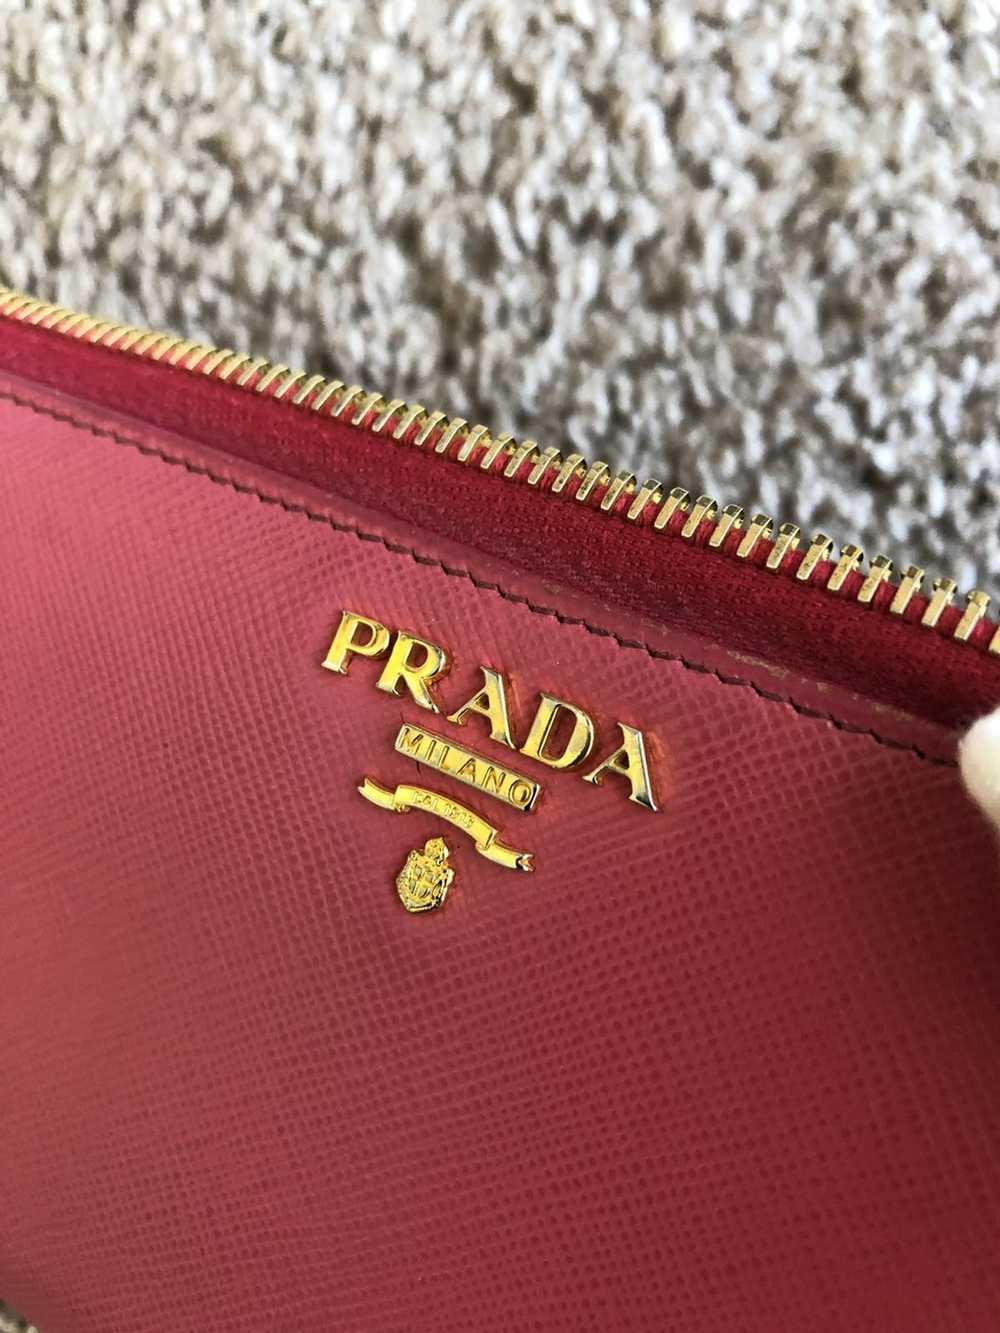 Prada Prada saffiano metal leather zippy wallet - image 2